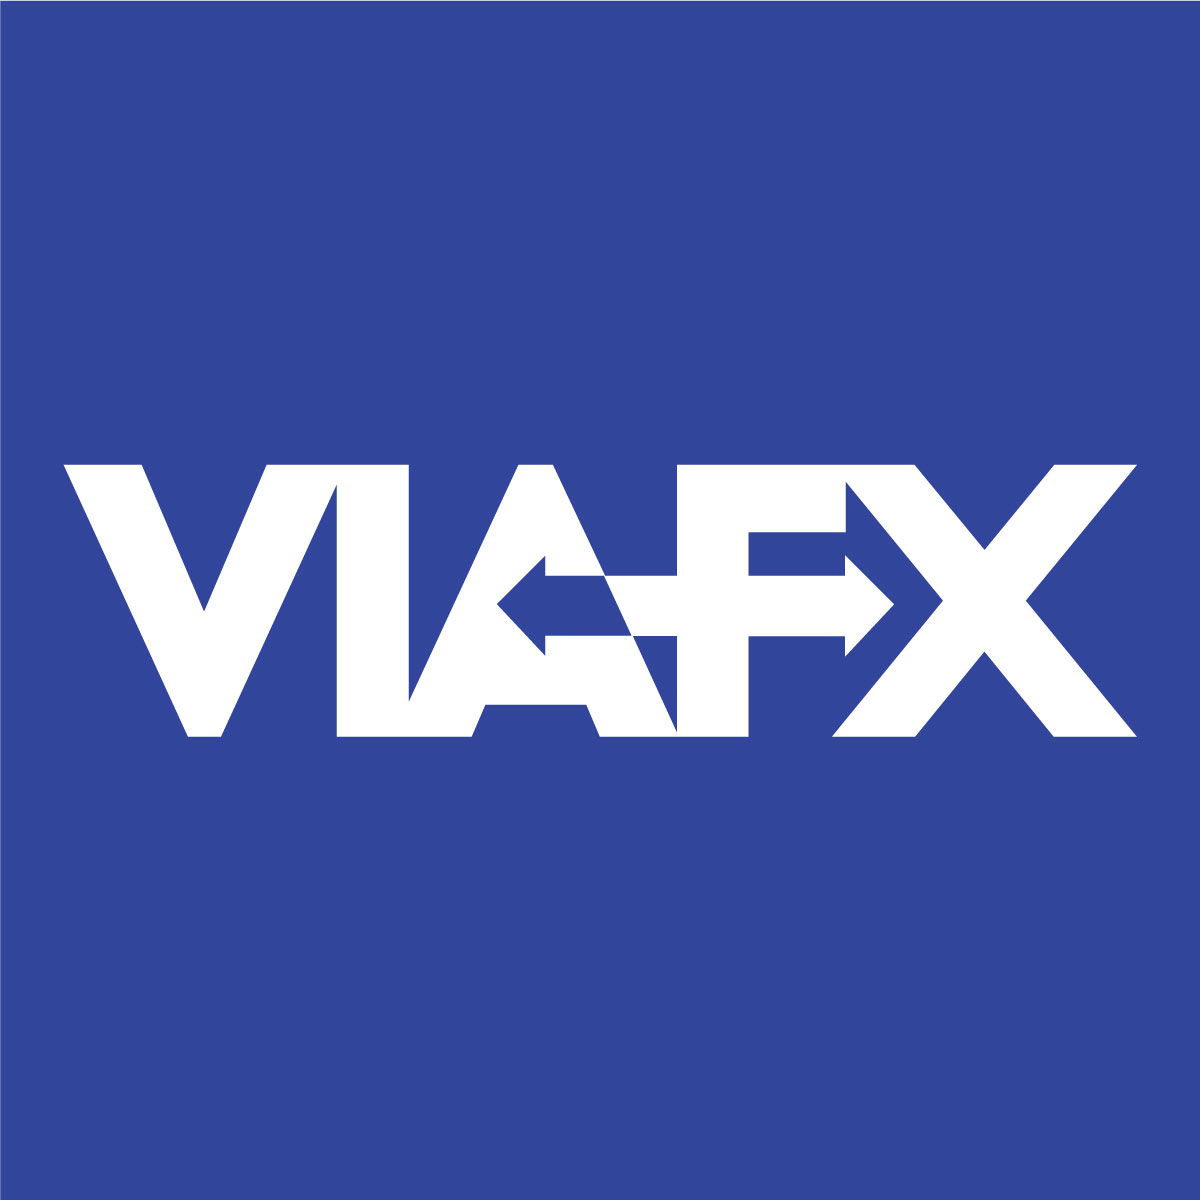 VIA FX Re-Branding